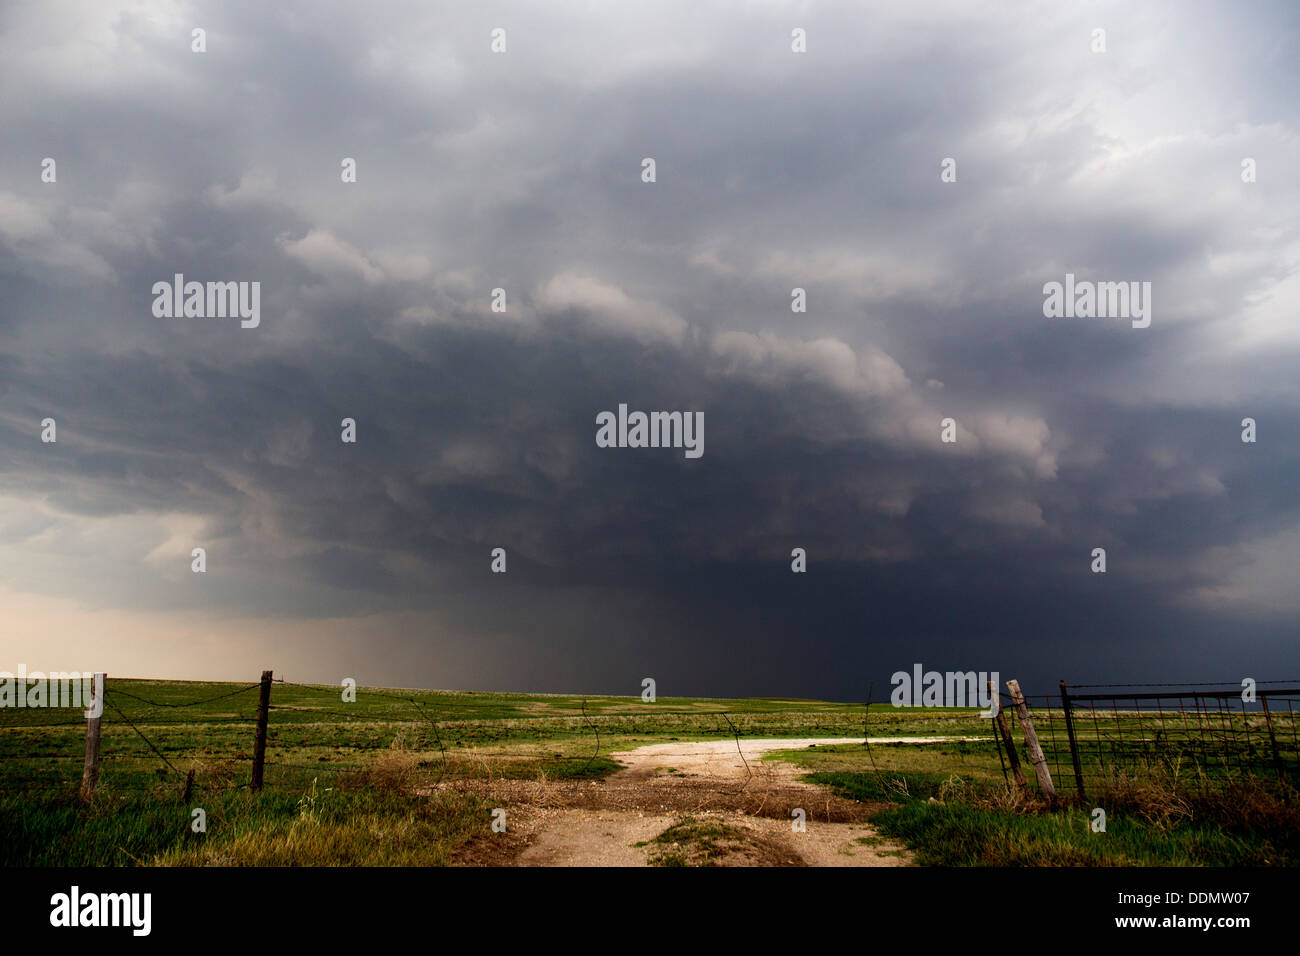 Rotating Supercell Thunderstorm, Ransom Kansas Stock Photo